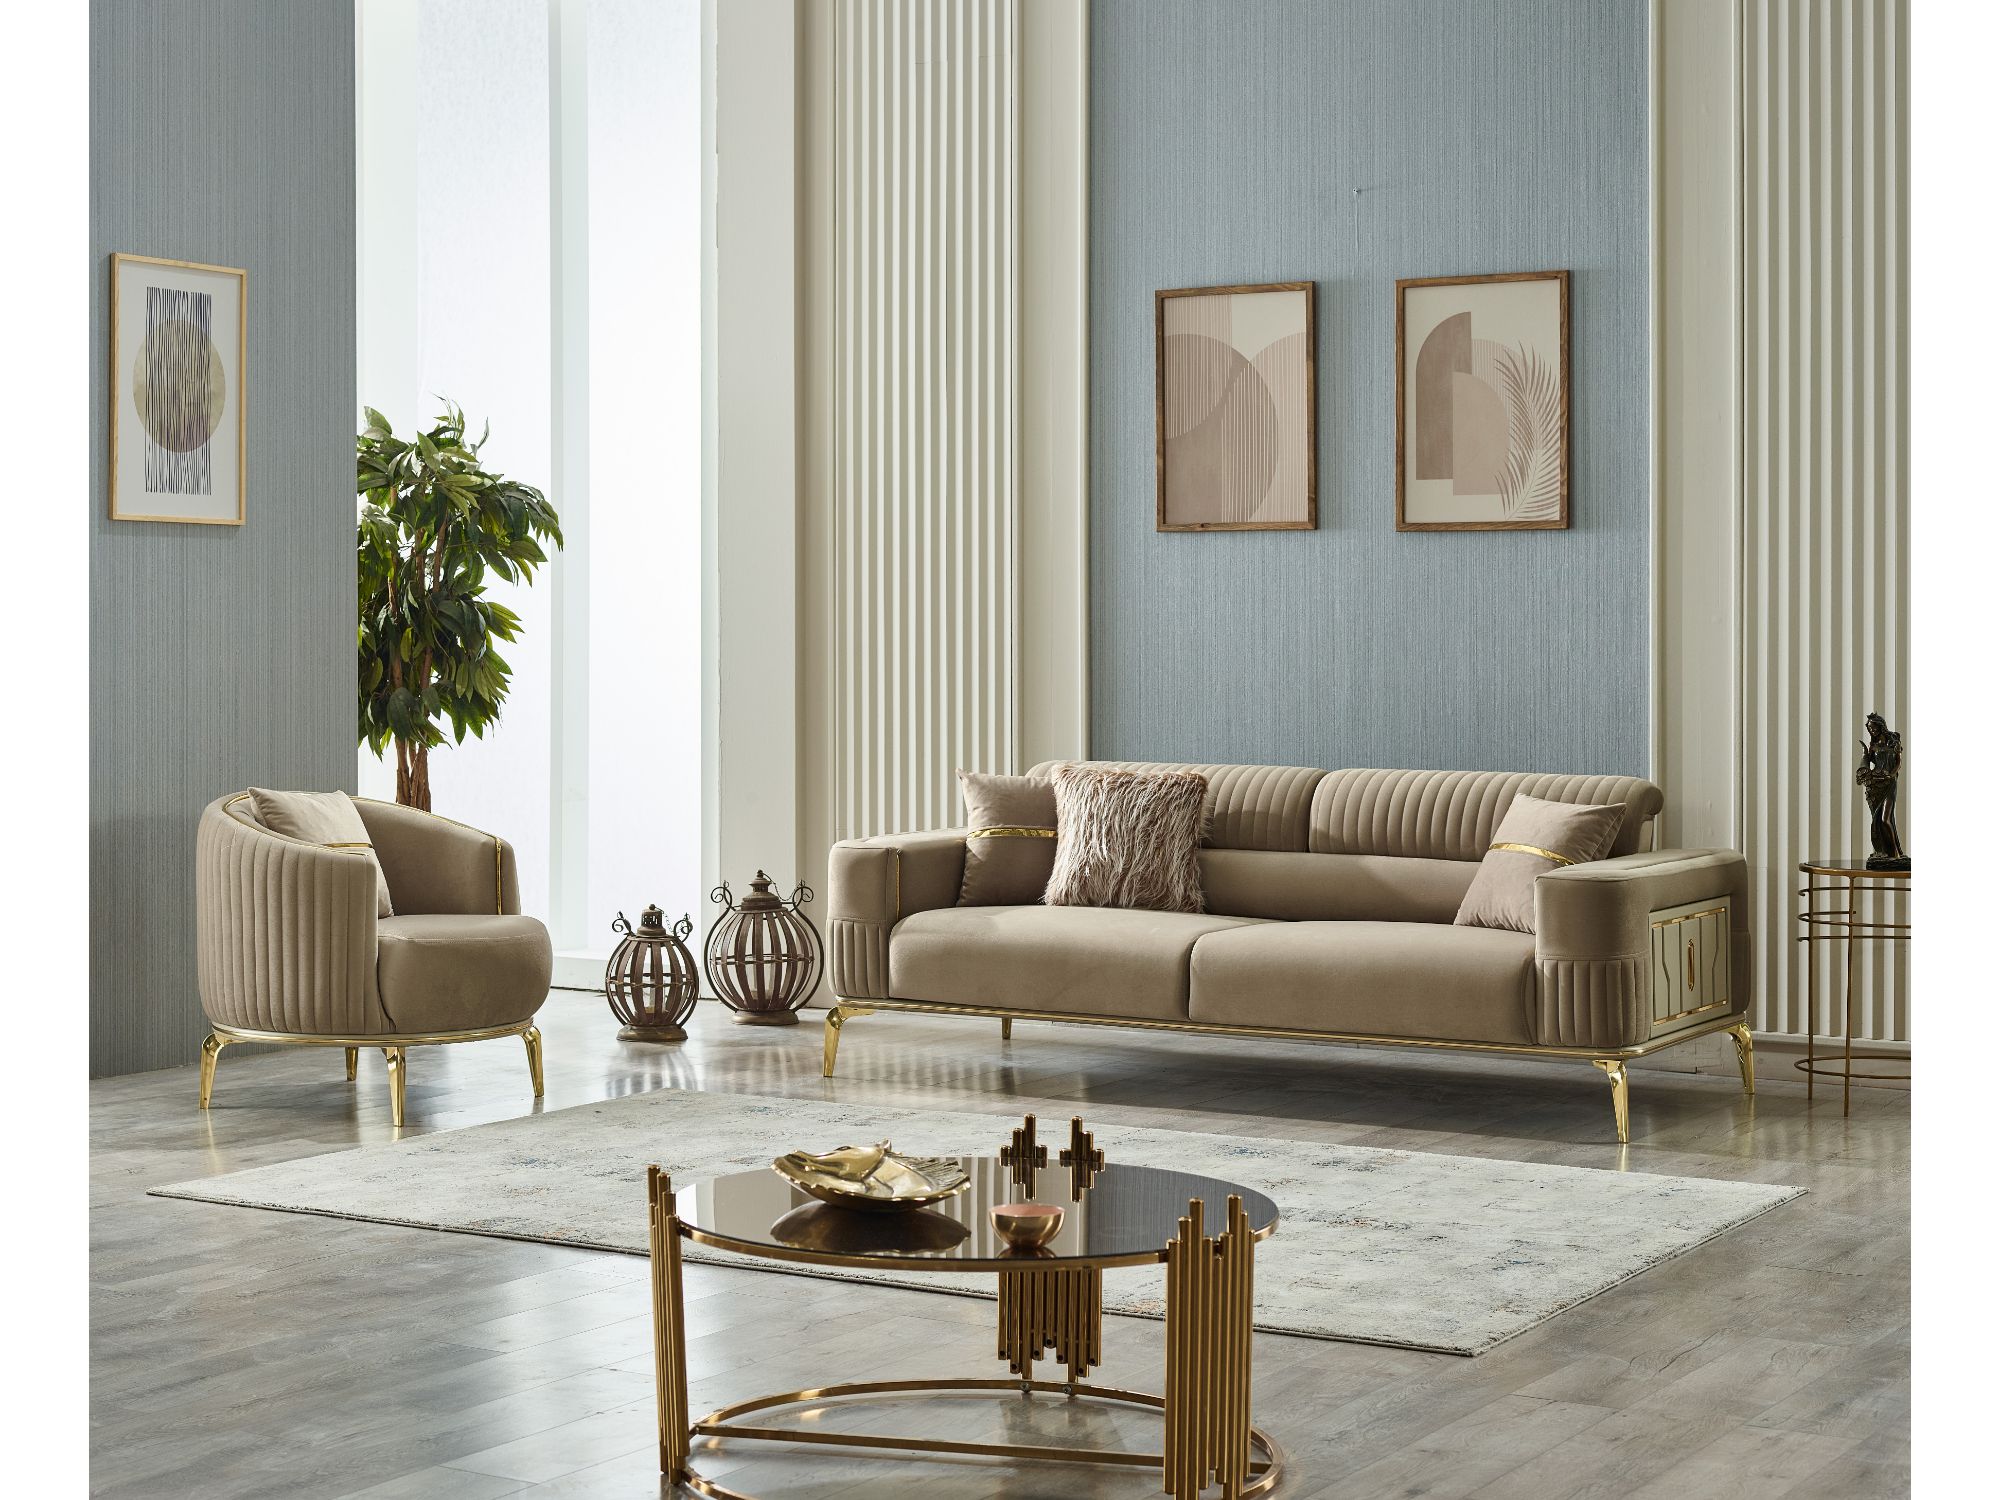 Armoni Convertible Sofa Beige With Gold Legs